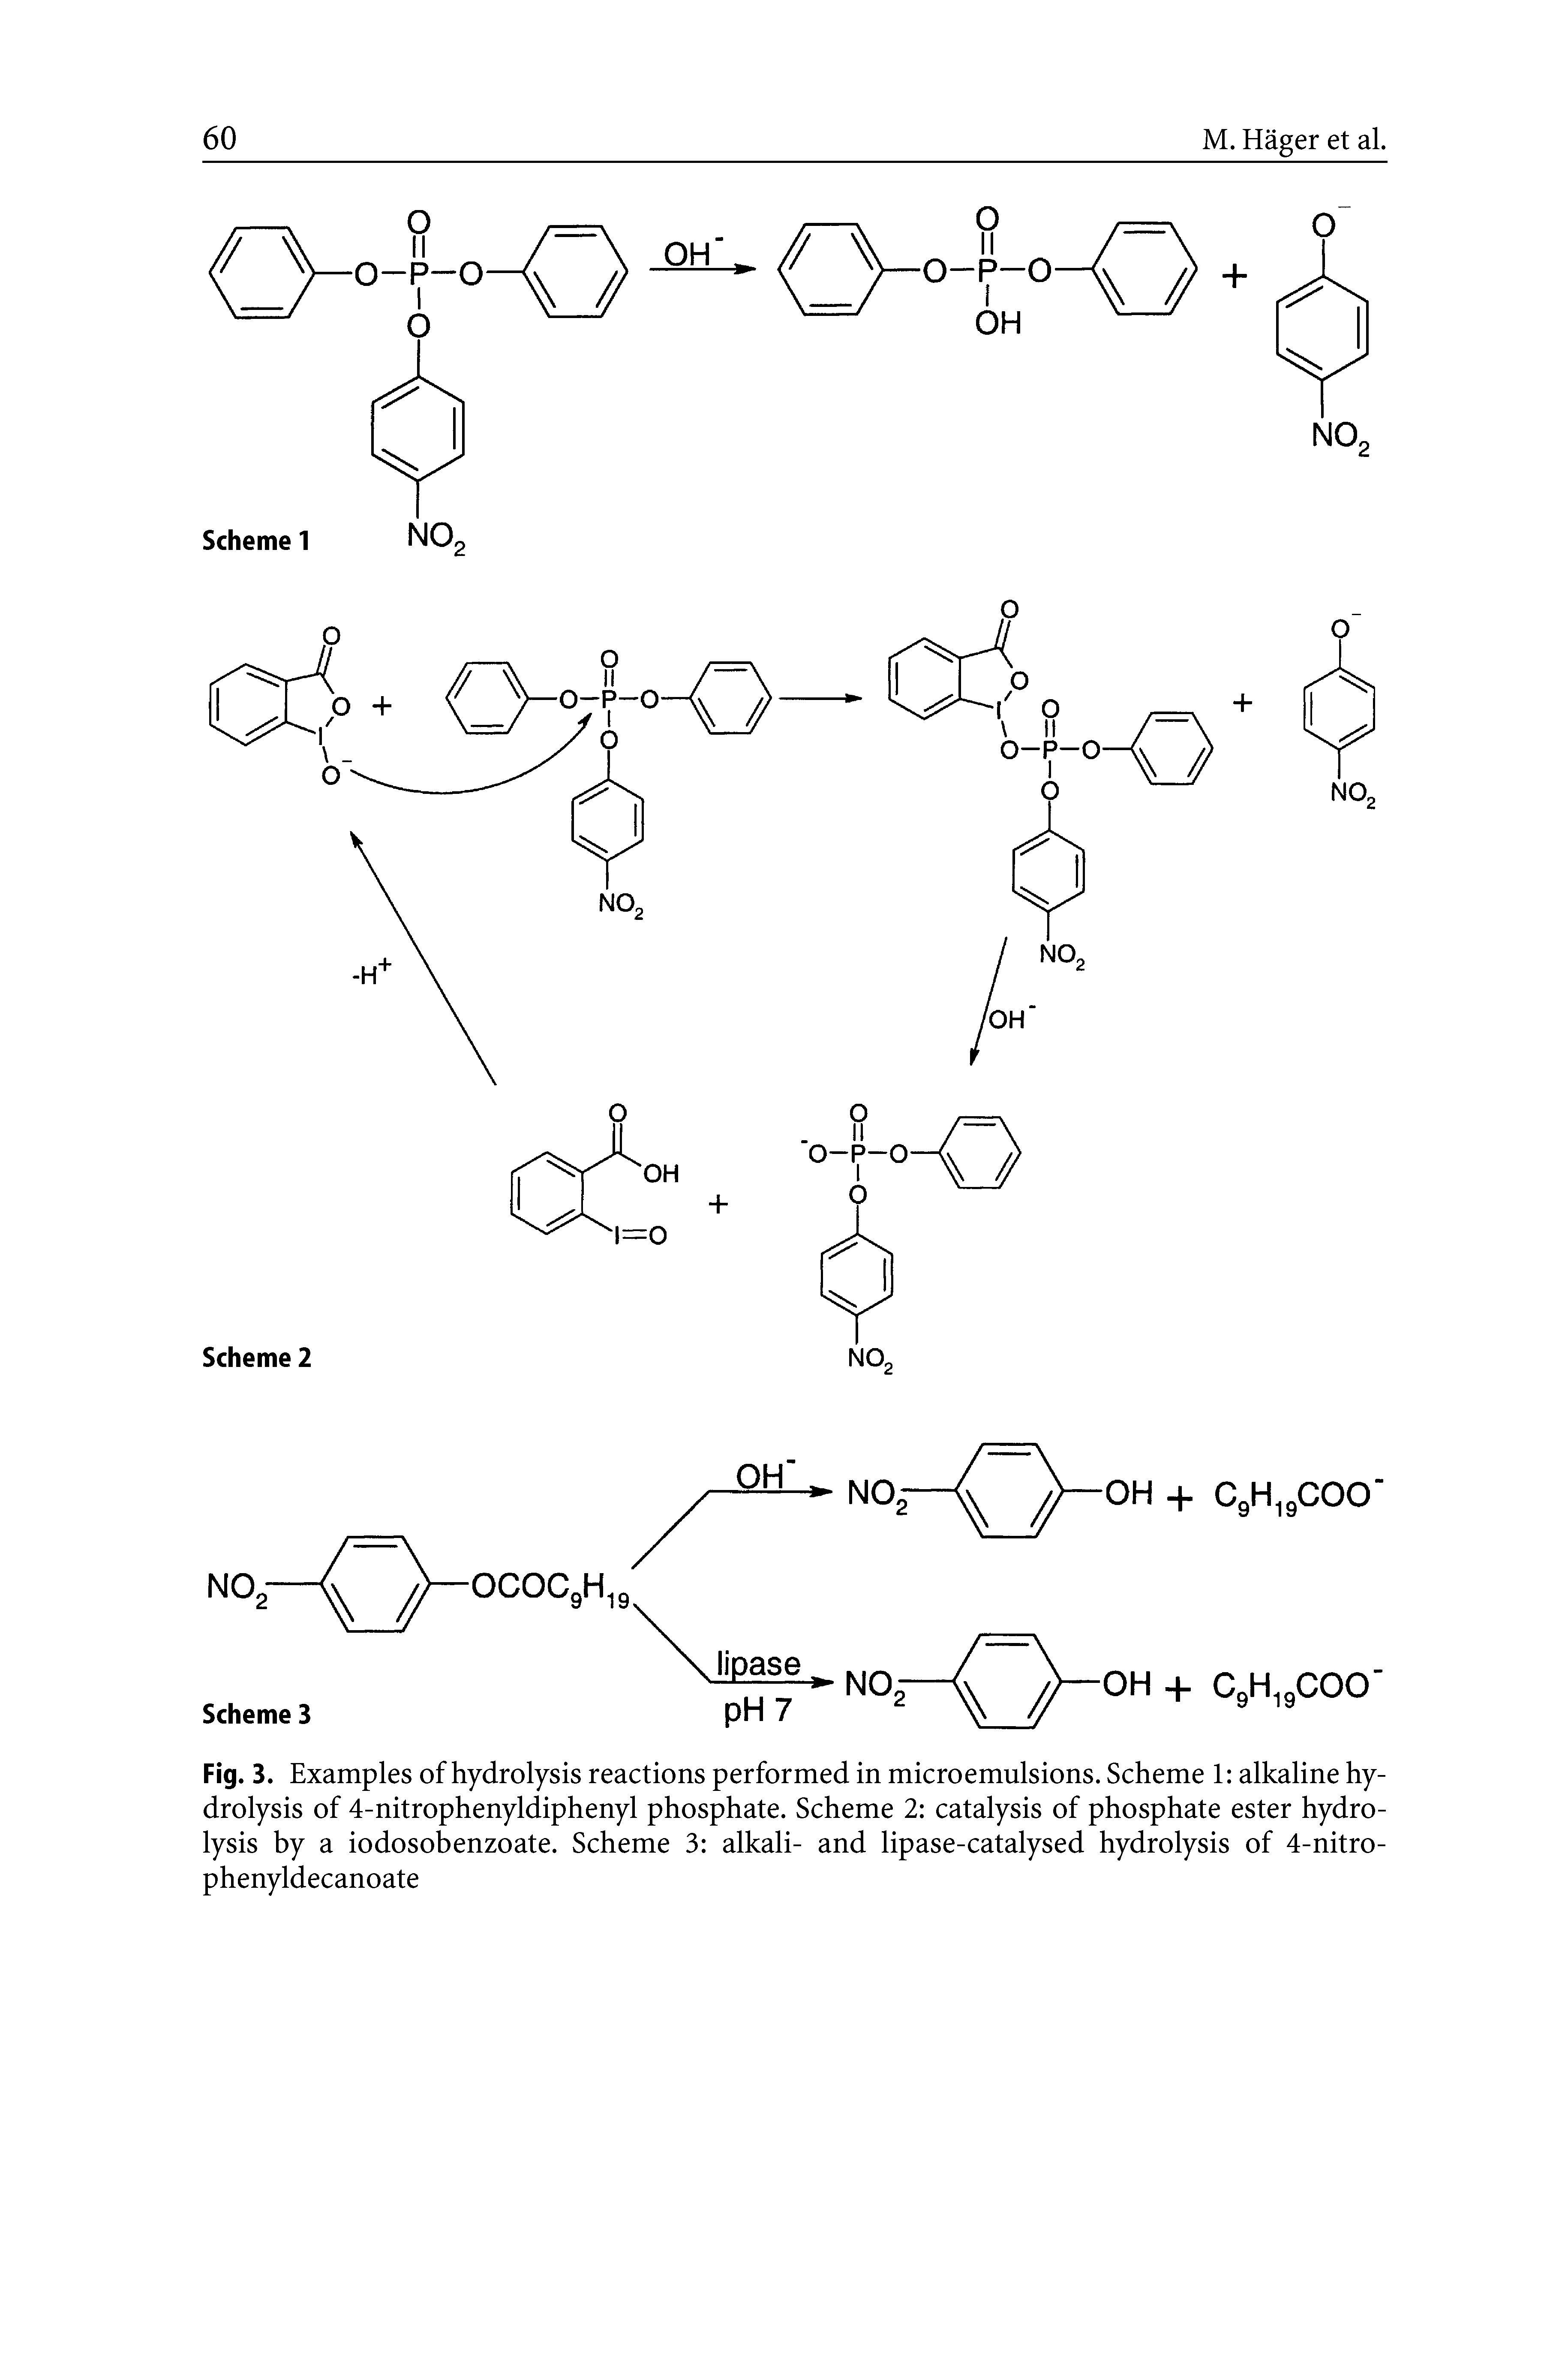 Fig. 3. Examples of hydrolysis reactions performed in microemulsions. Scheme 1 alkaline hydrolysis of 4-nitrophenyldiphenyl phosphate. Scheme 2 catalysis of phosphate ester hydrolysis by a iodosobenzoate. Scheme 3 alkali- and lipase-catalysed hydrolysis of 4-nitro-phenyldecanoate...